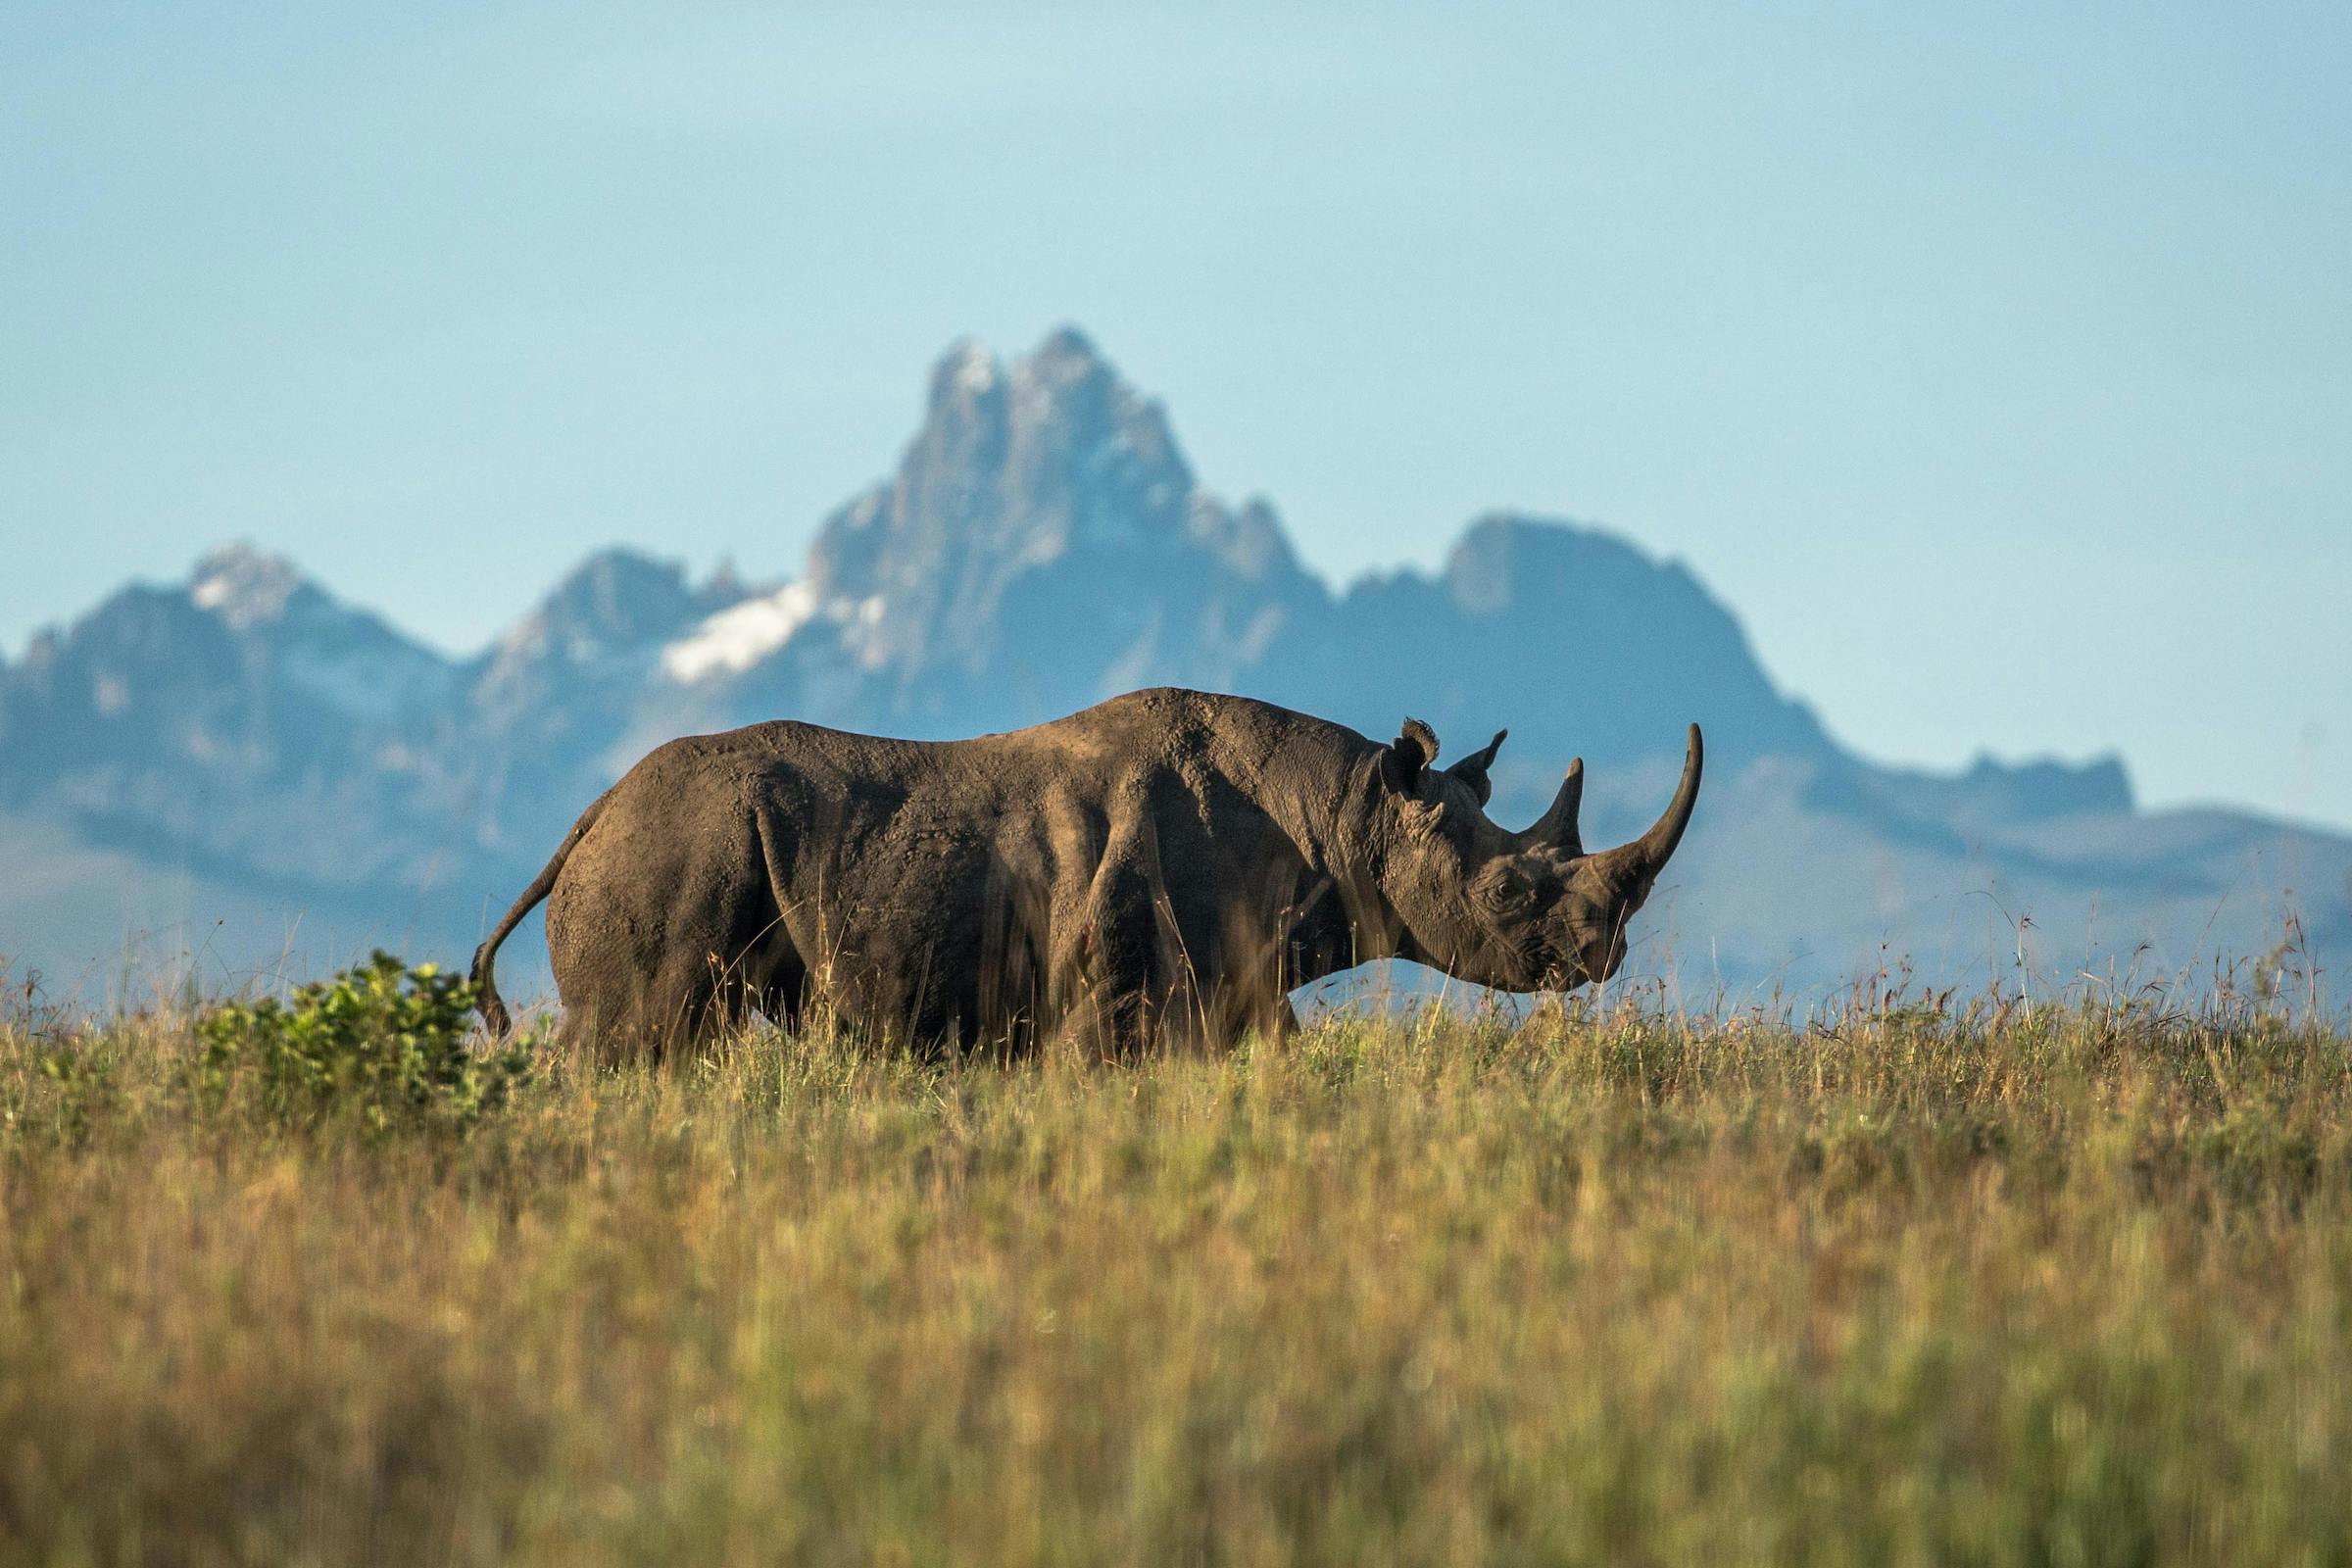 Threats to Rhinos